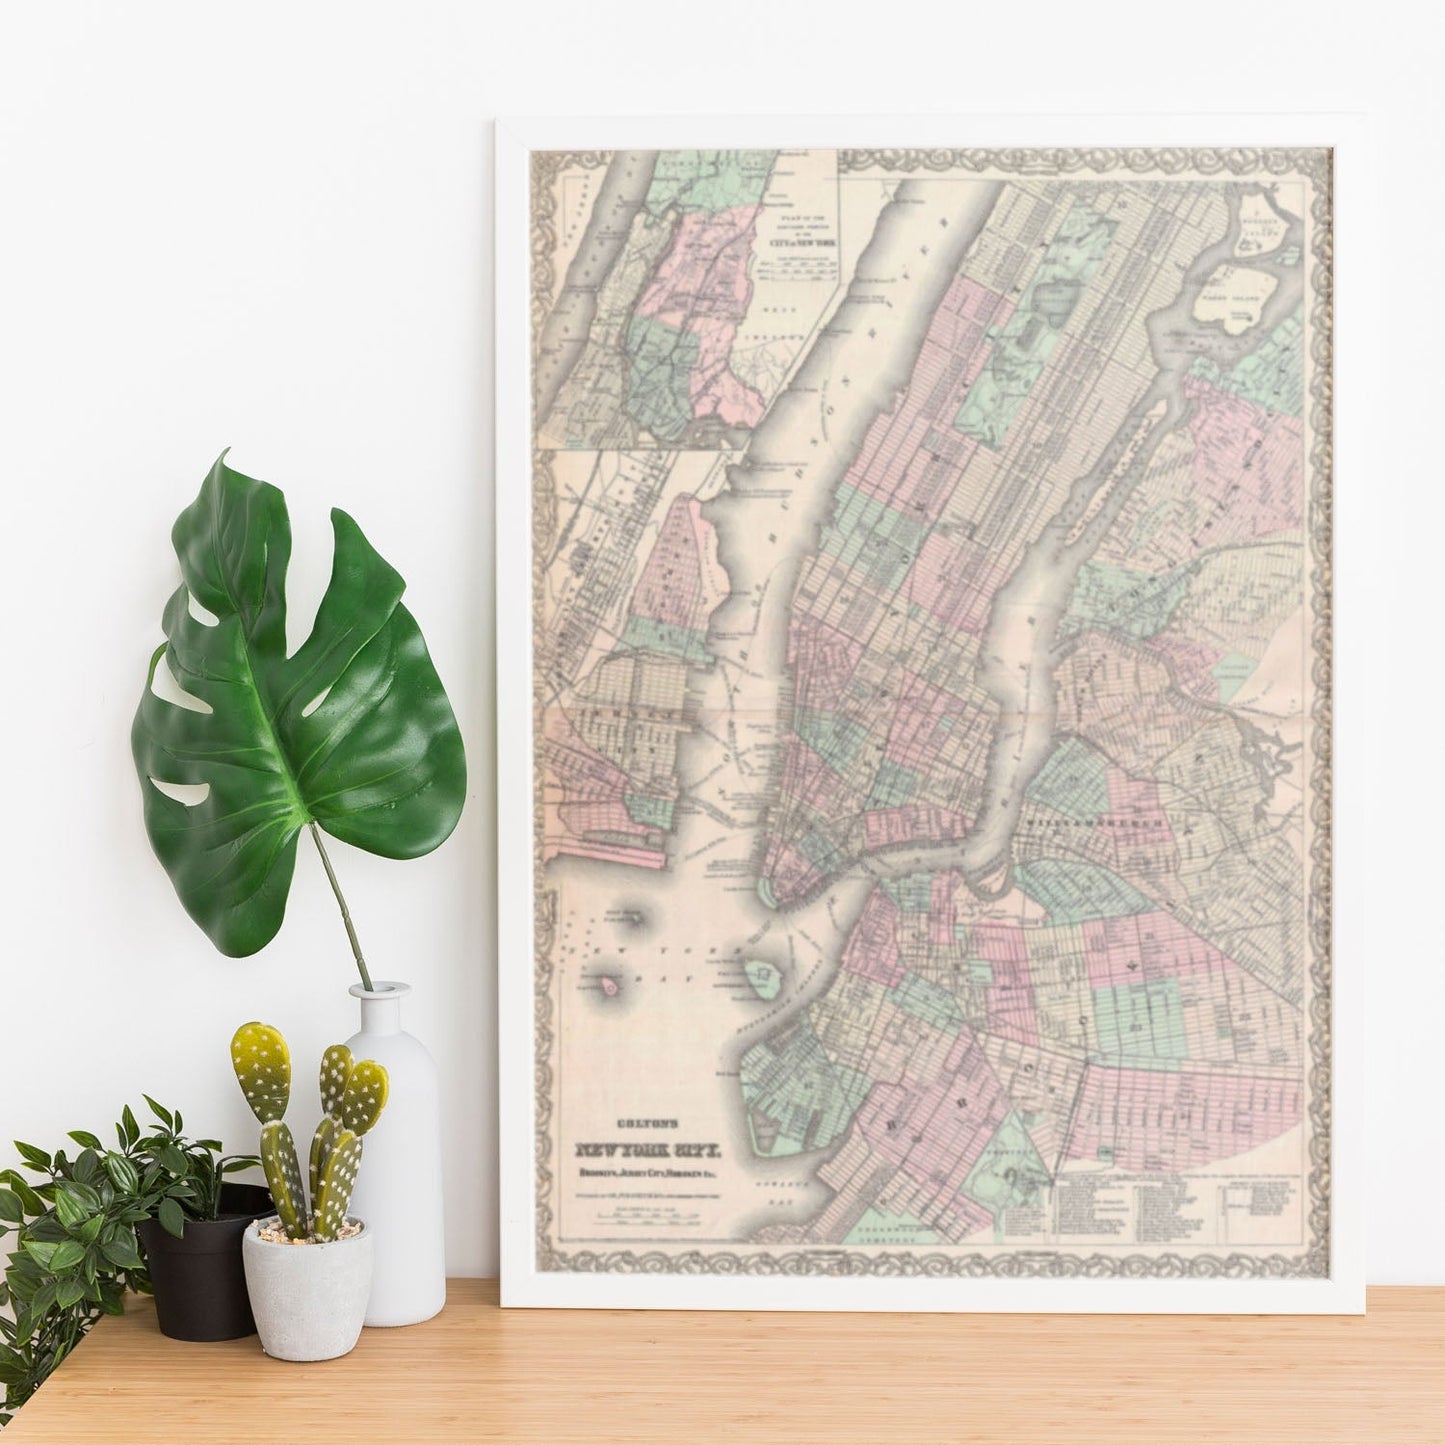 1865 Colton Map of New York City Manhattan Brooklyn Long Island City Geographicus NewYorkCity colton 1866-Artwork-Nacnic-Nacnic Estudio SL